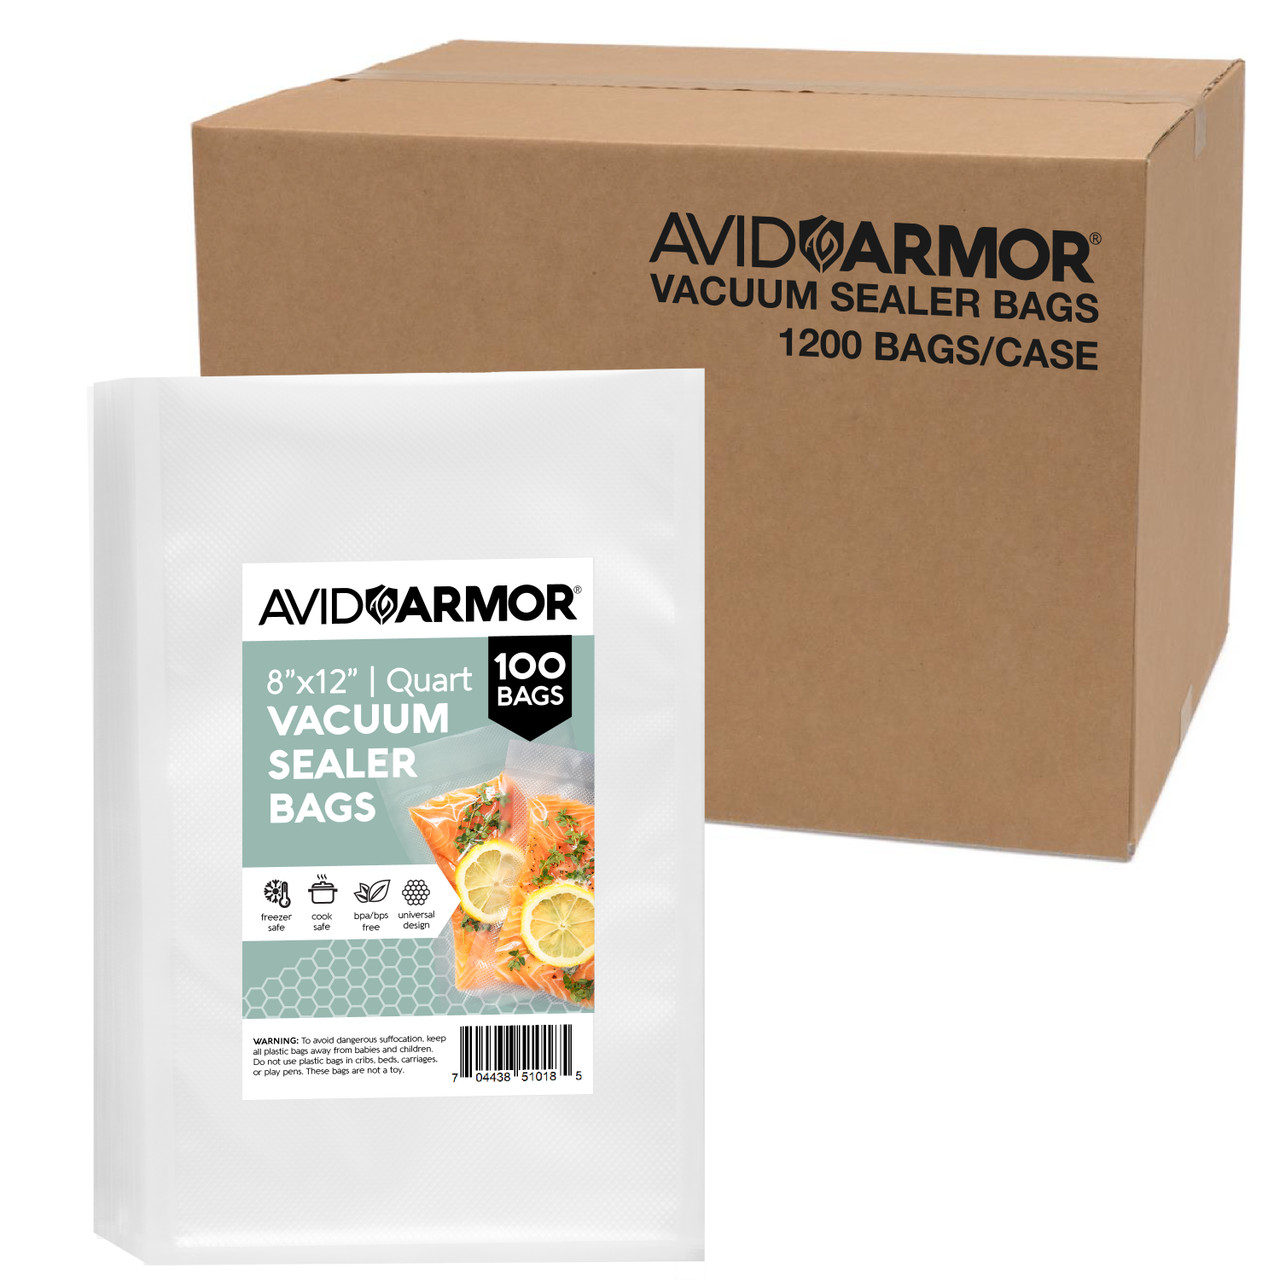 Avid Armor Vacuum Sealer Bags Quart Size 200 Bulk Pack 8 x 12 for